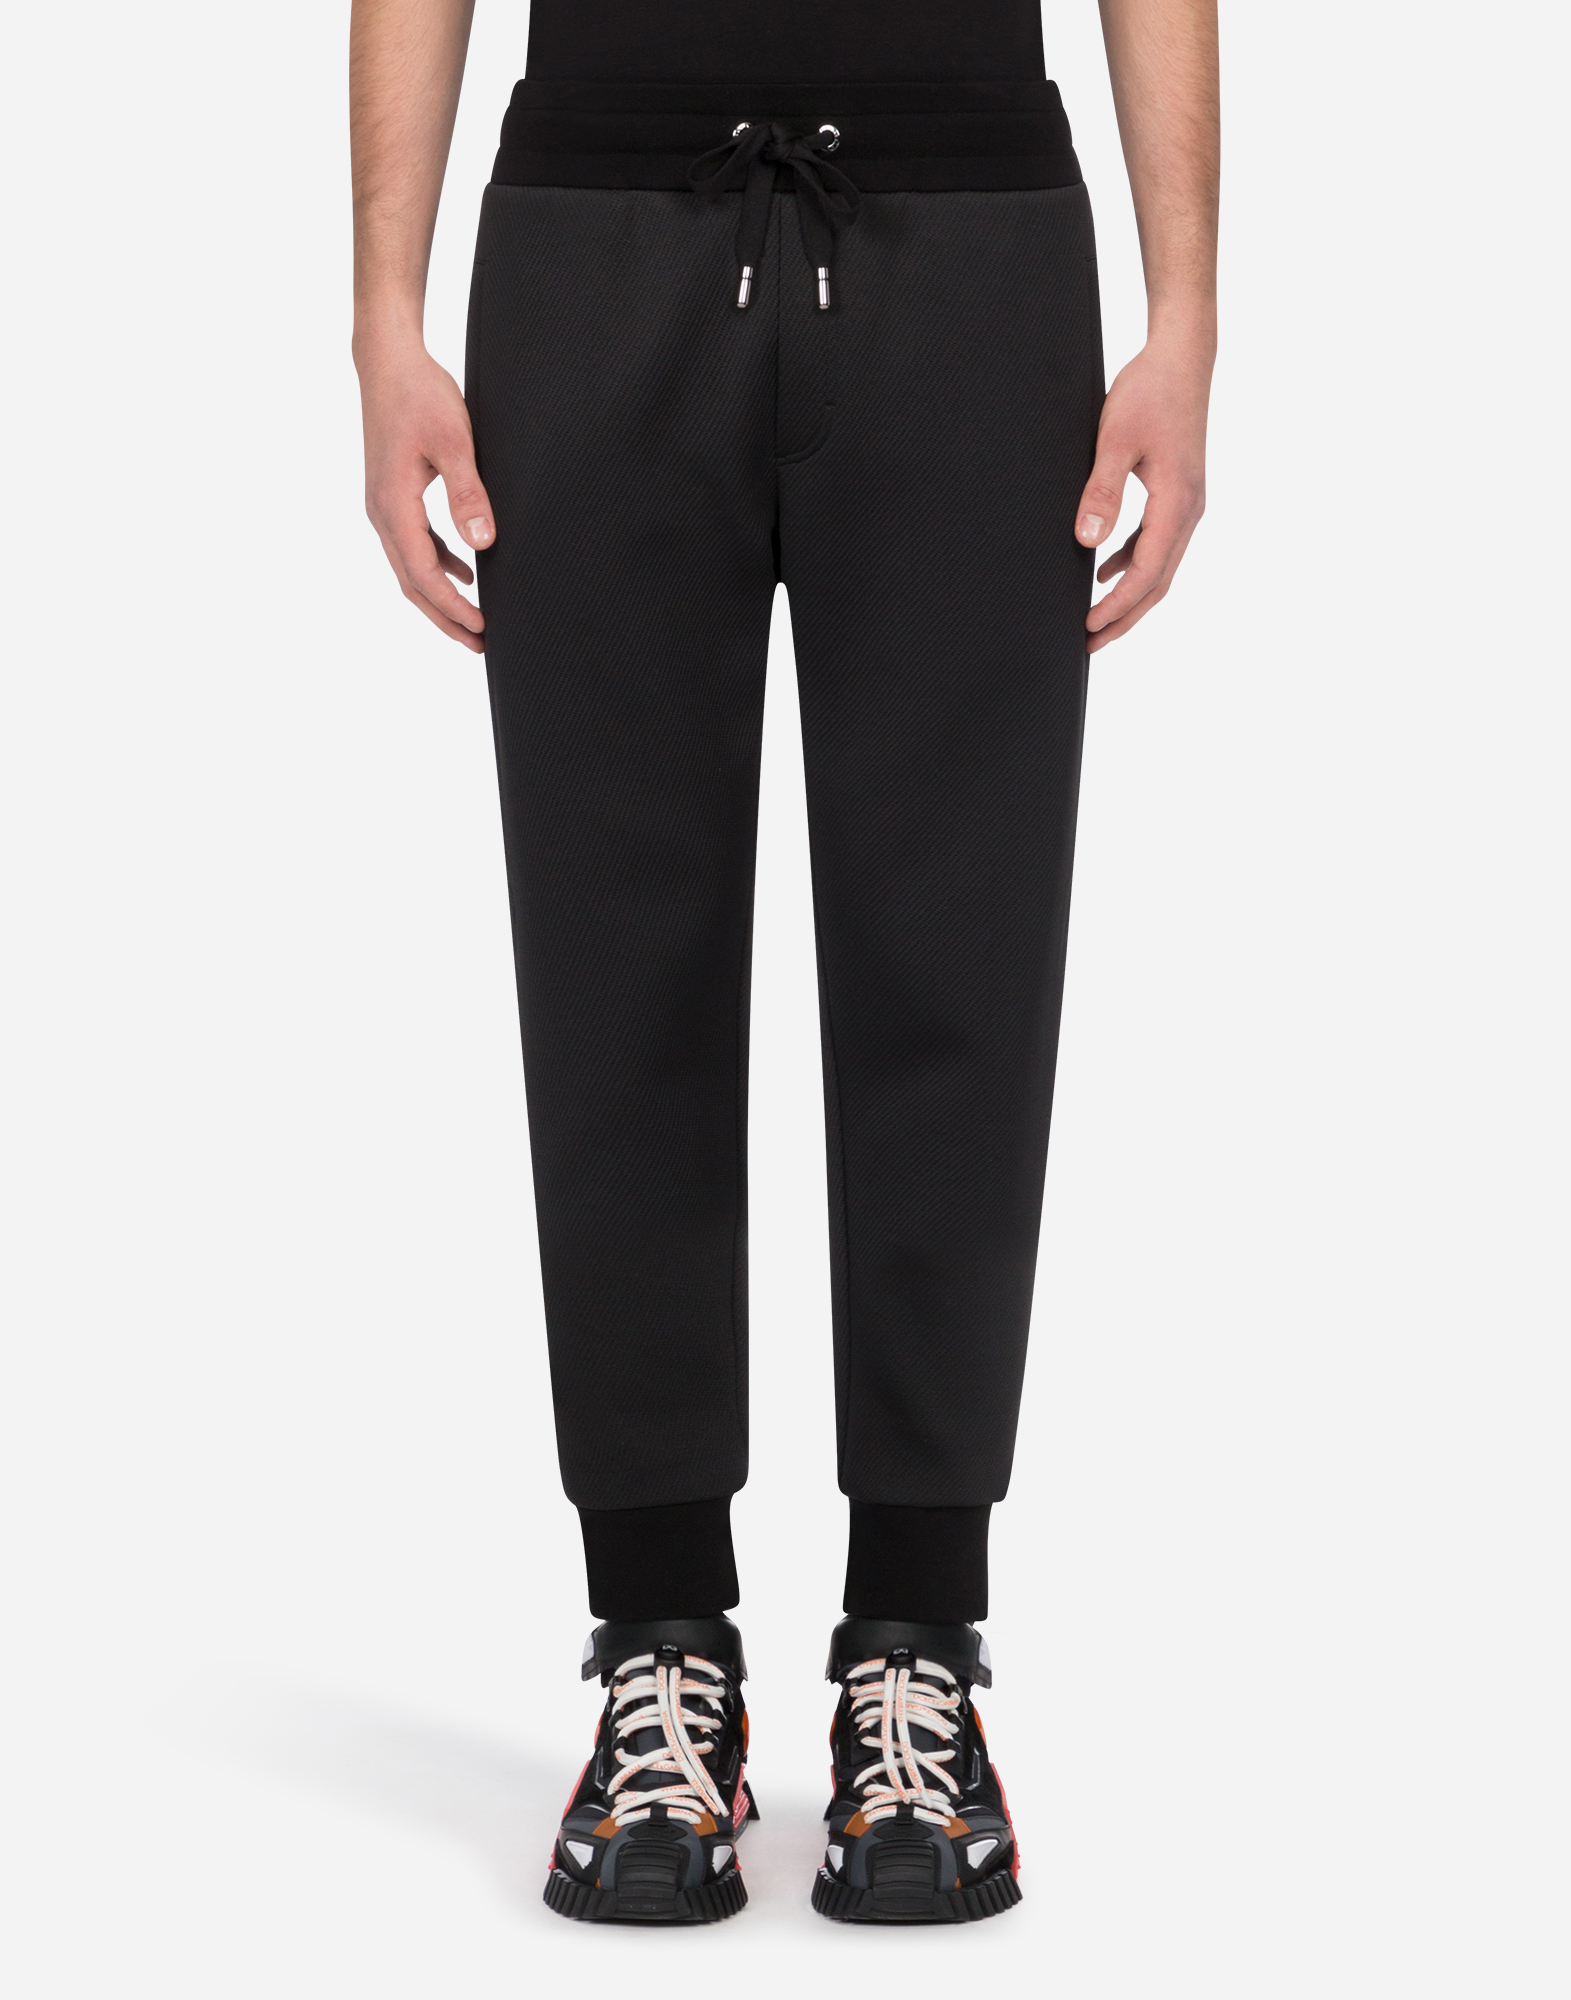 Jacquard jogging pants in Black